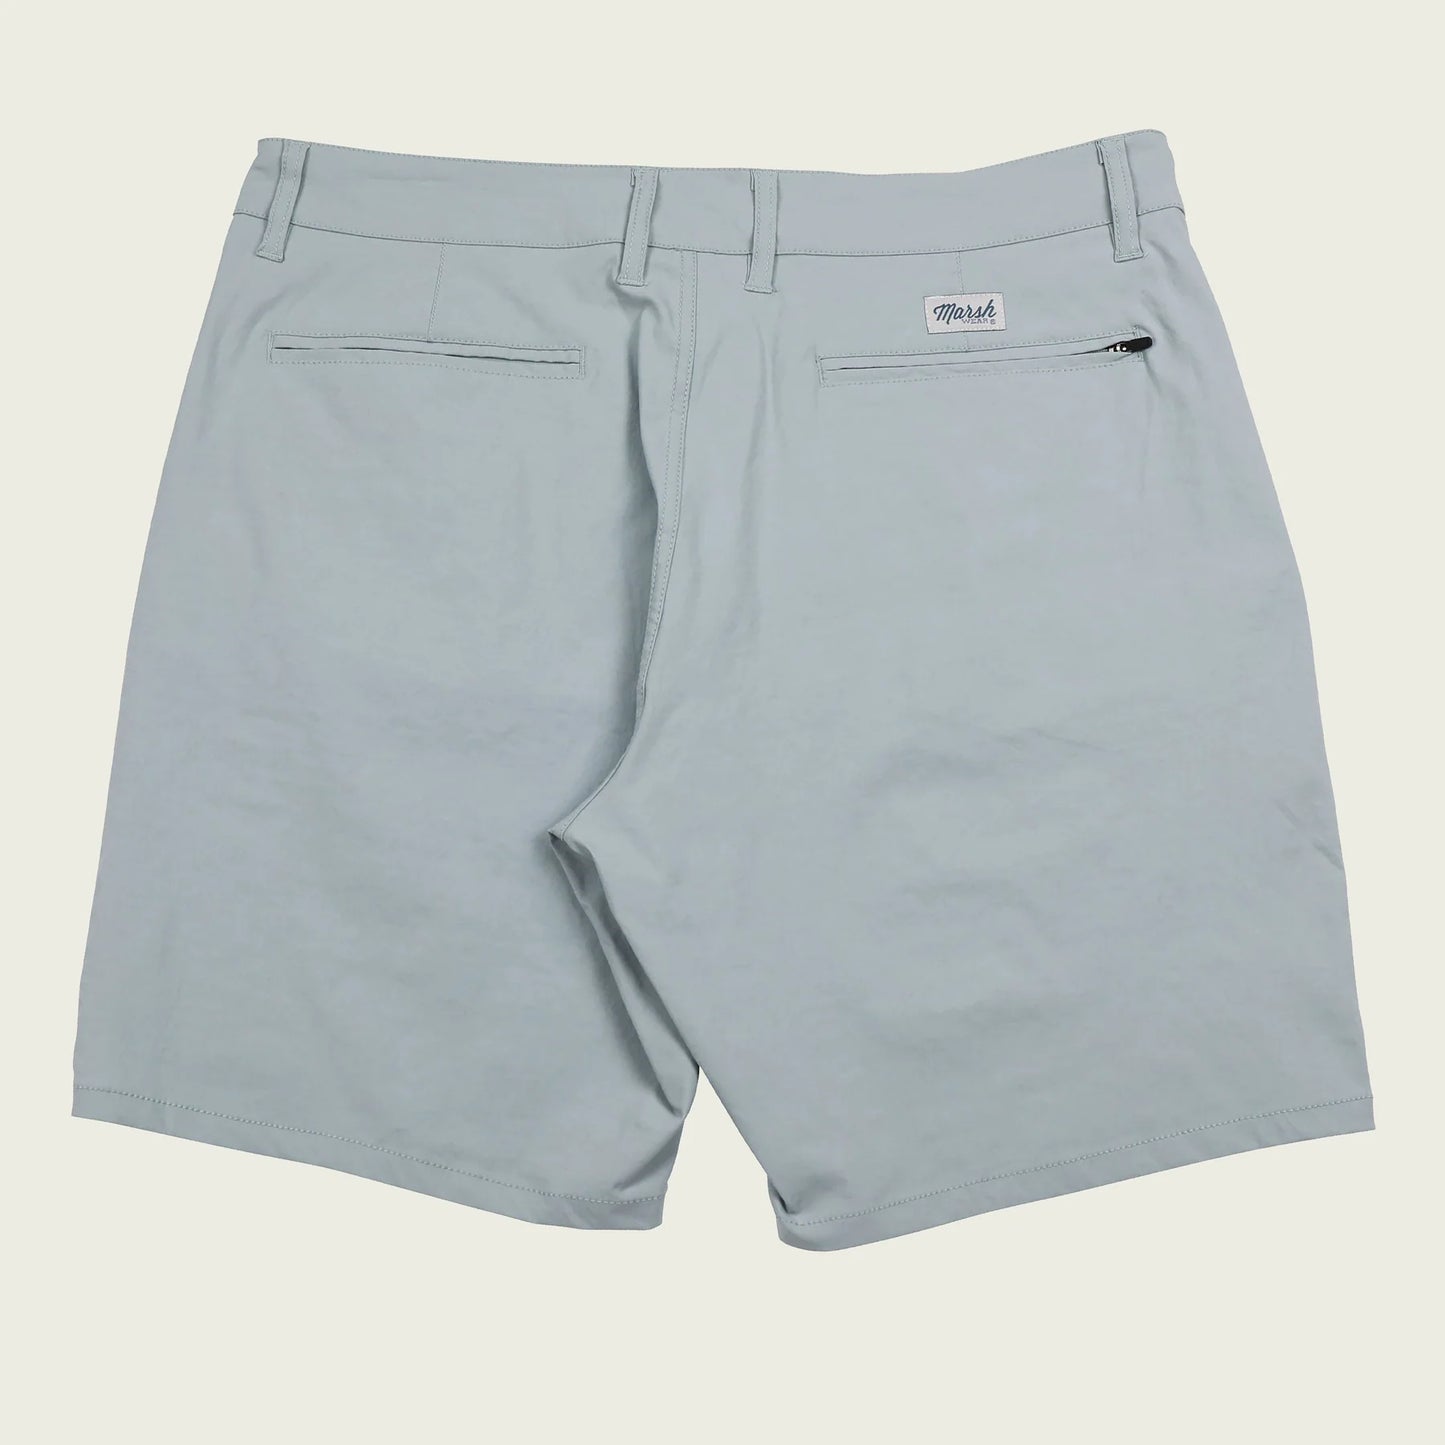 Marsh Wear Prime Shorts - Smoke